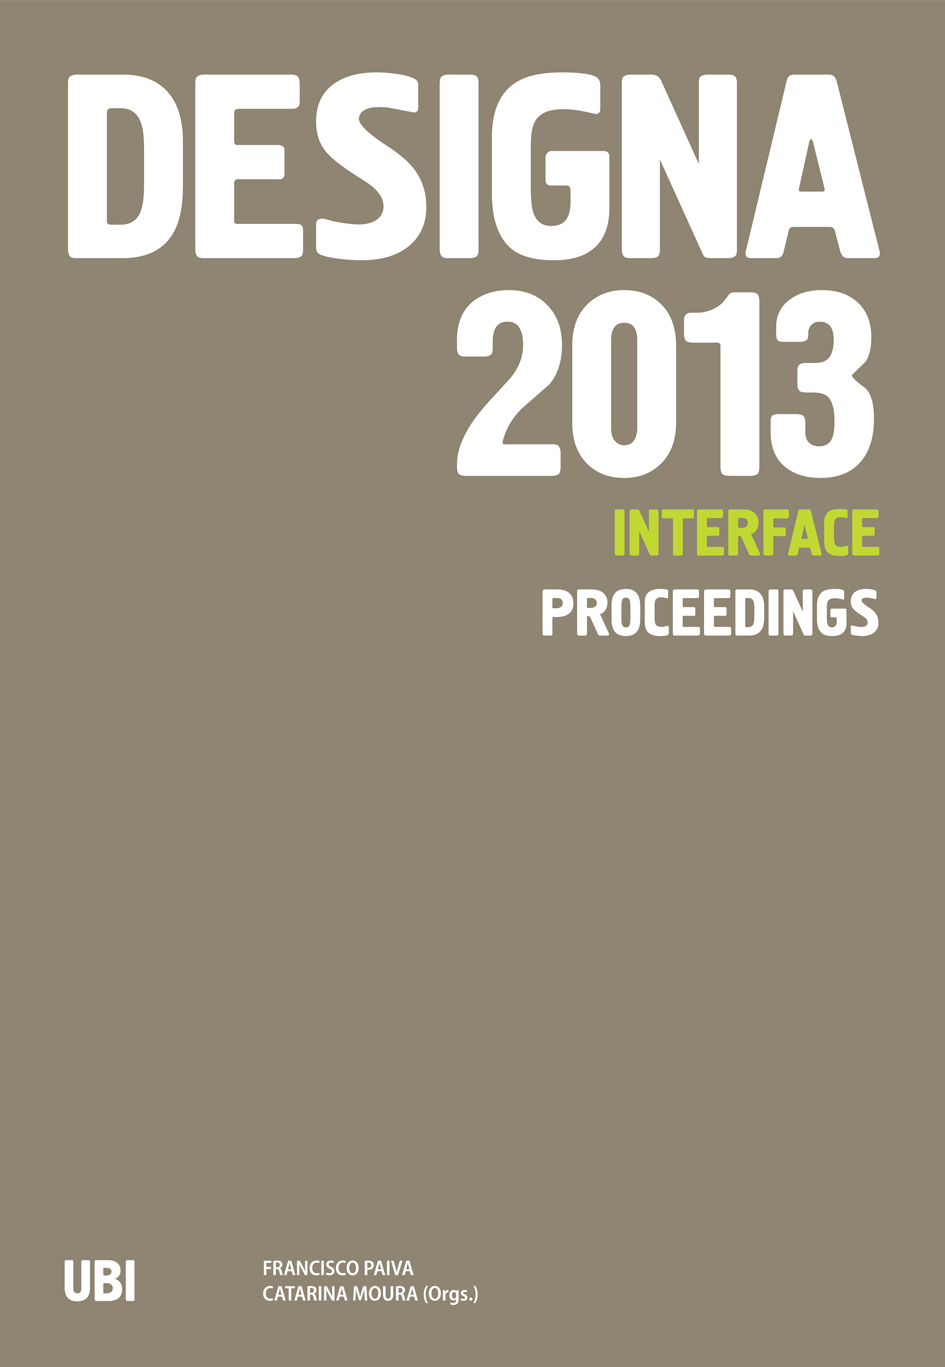 Capa: Francisco Paiva, Catarina Moura (Orgs.) (2014) DESIGNA 2013 - Interface. Communication  +  Philosophy  +  Humanities. .